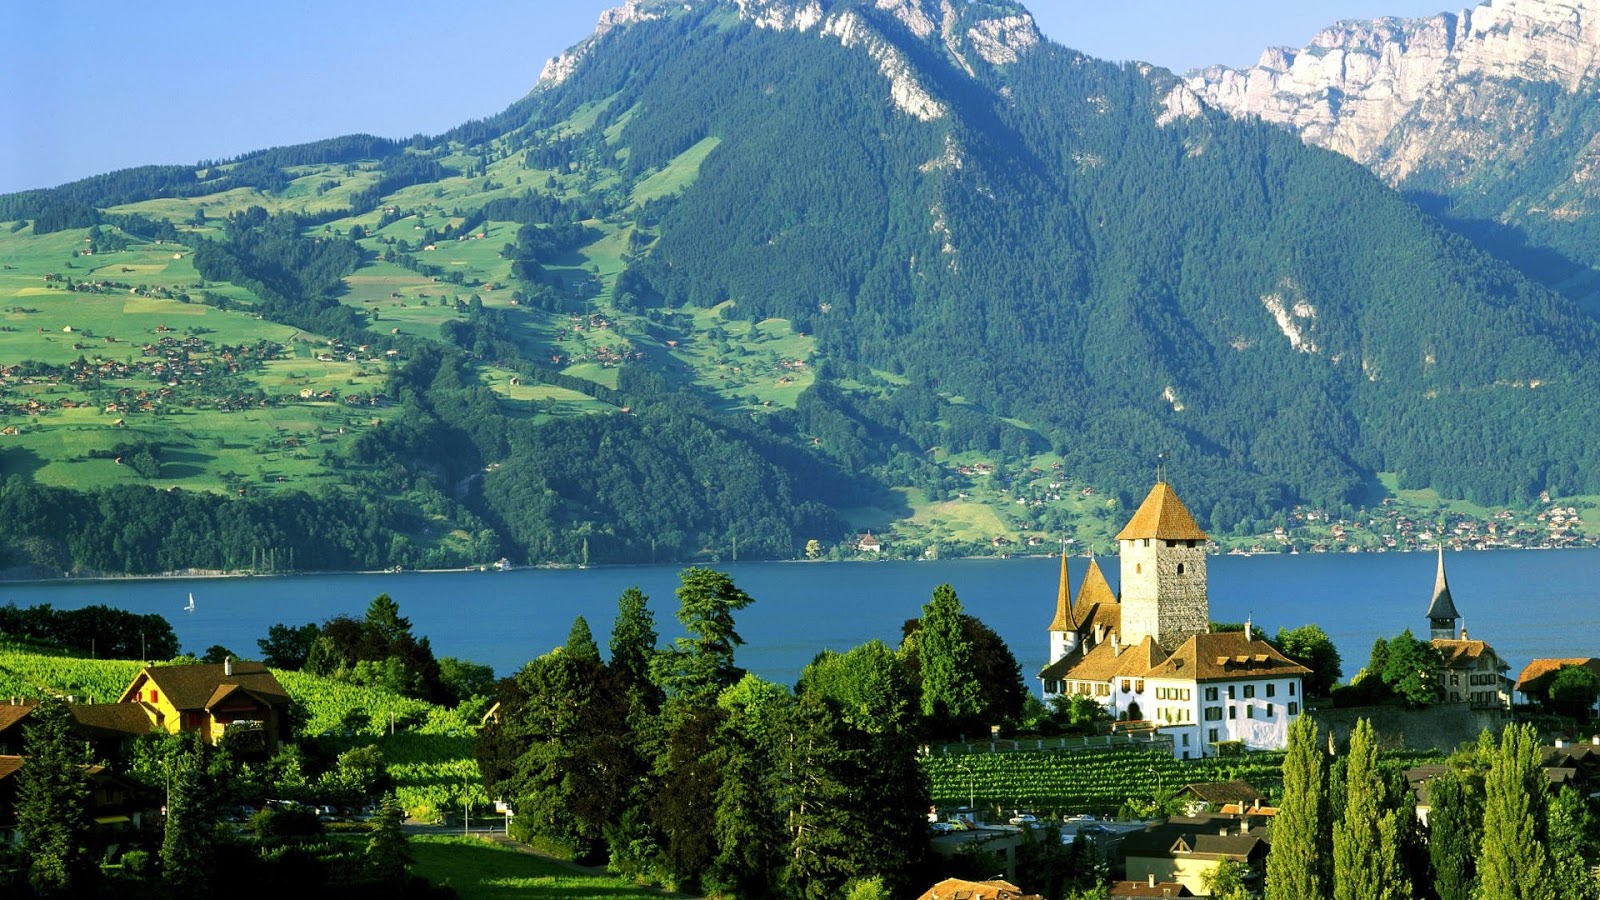 http://3.bp.blogspot.com/-cdXKjBWrsfM/UHdWHcF03pI/AAAAAAAAB68/AOW1leEAFxk/s1600/Amazing+Hereby+Castle+in+Switzerland+wallpaper+(1920x1080).jpg